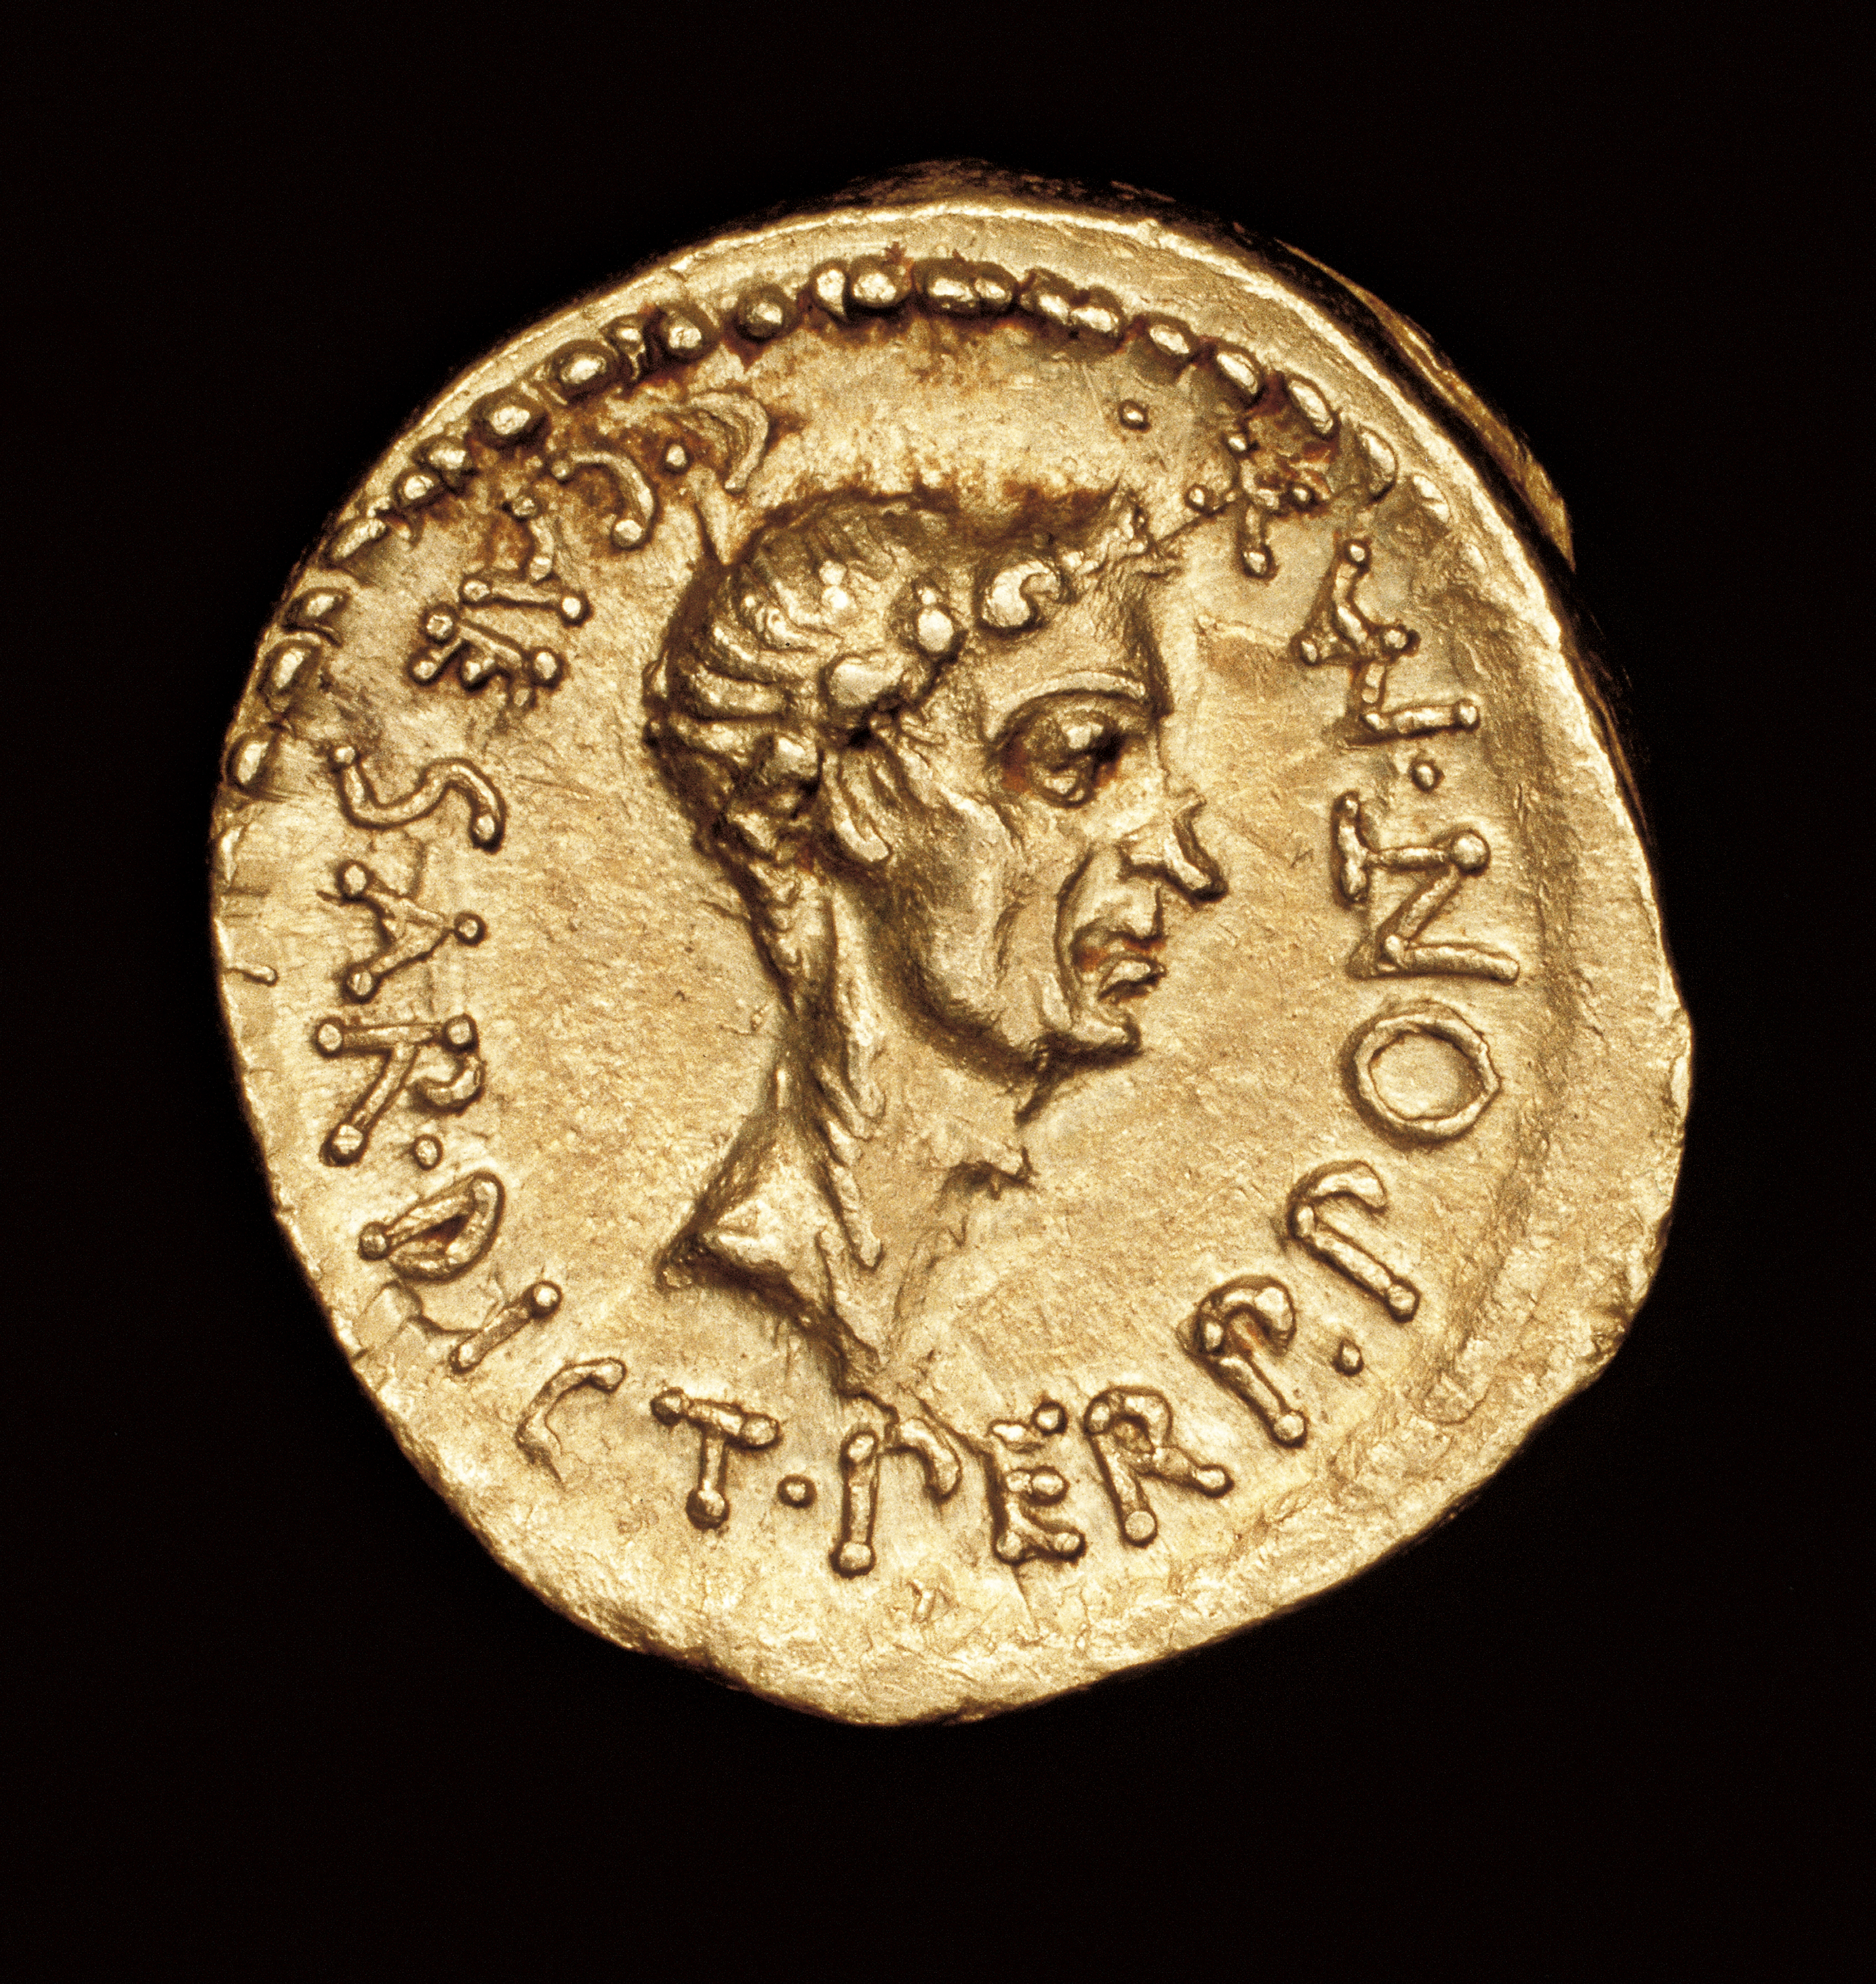 Rare Ancient Roman Coin, Roman Gold Aereus, Julius Caesar, c 43 BC, minted in Cisalpine Gaul. (Hoberman Collection&mdash;UIG/Getty Images)